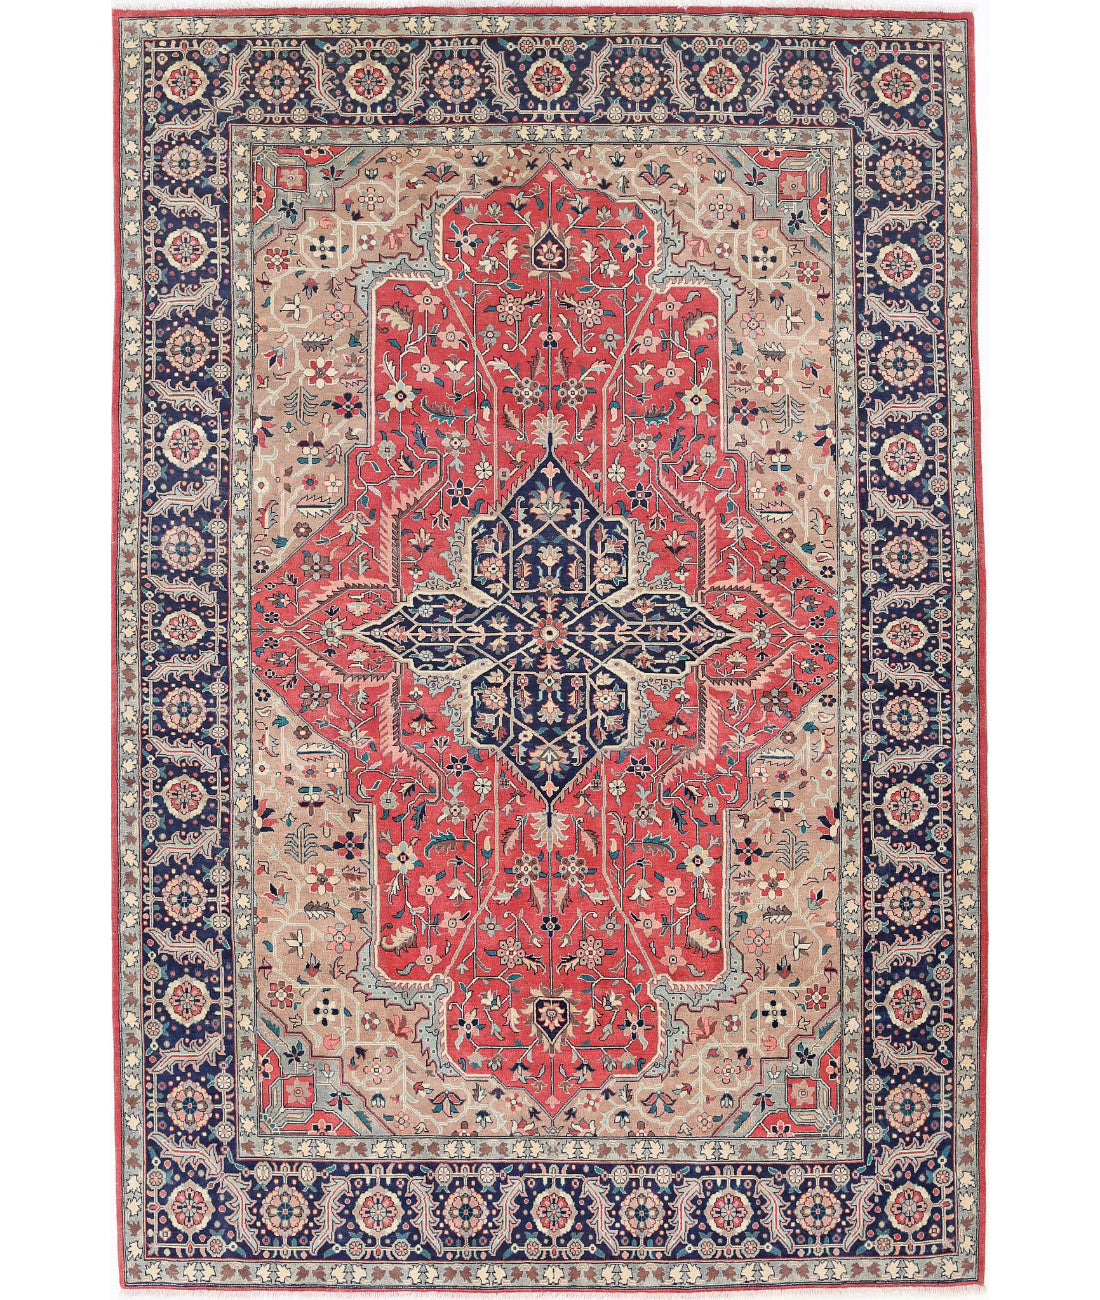 Heritage-hand-knotted-pak-persian-wool-rug-5025268.jpg